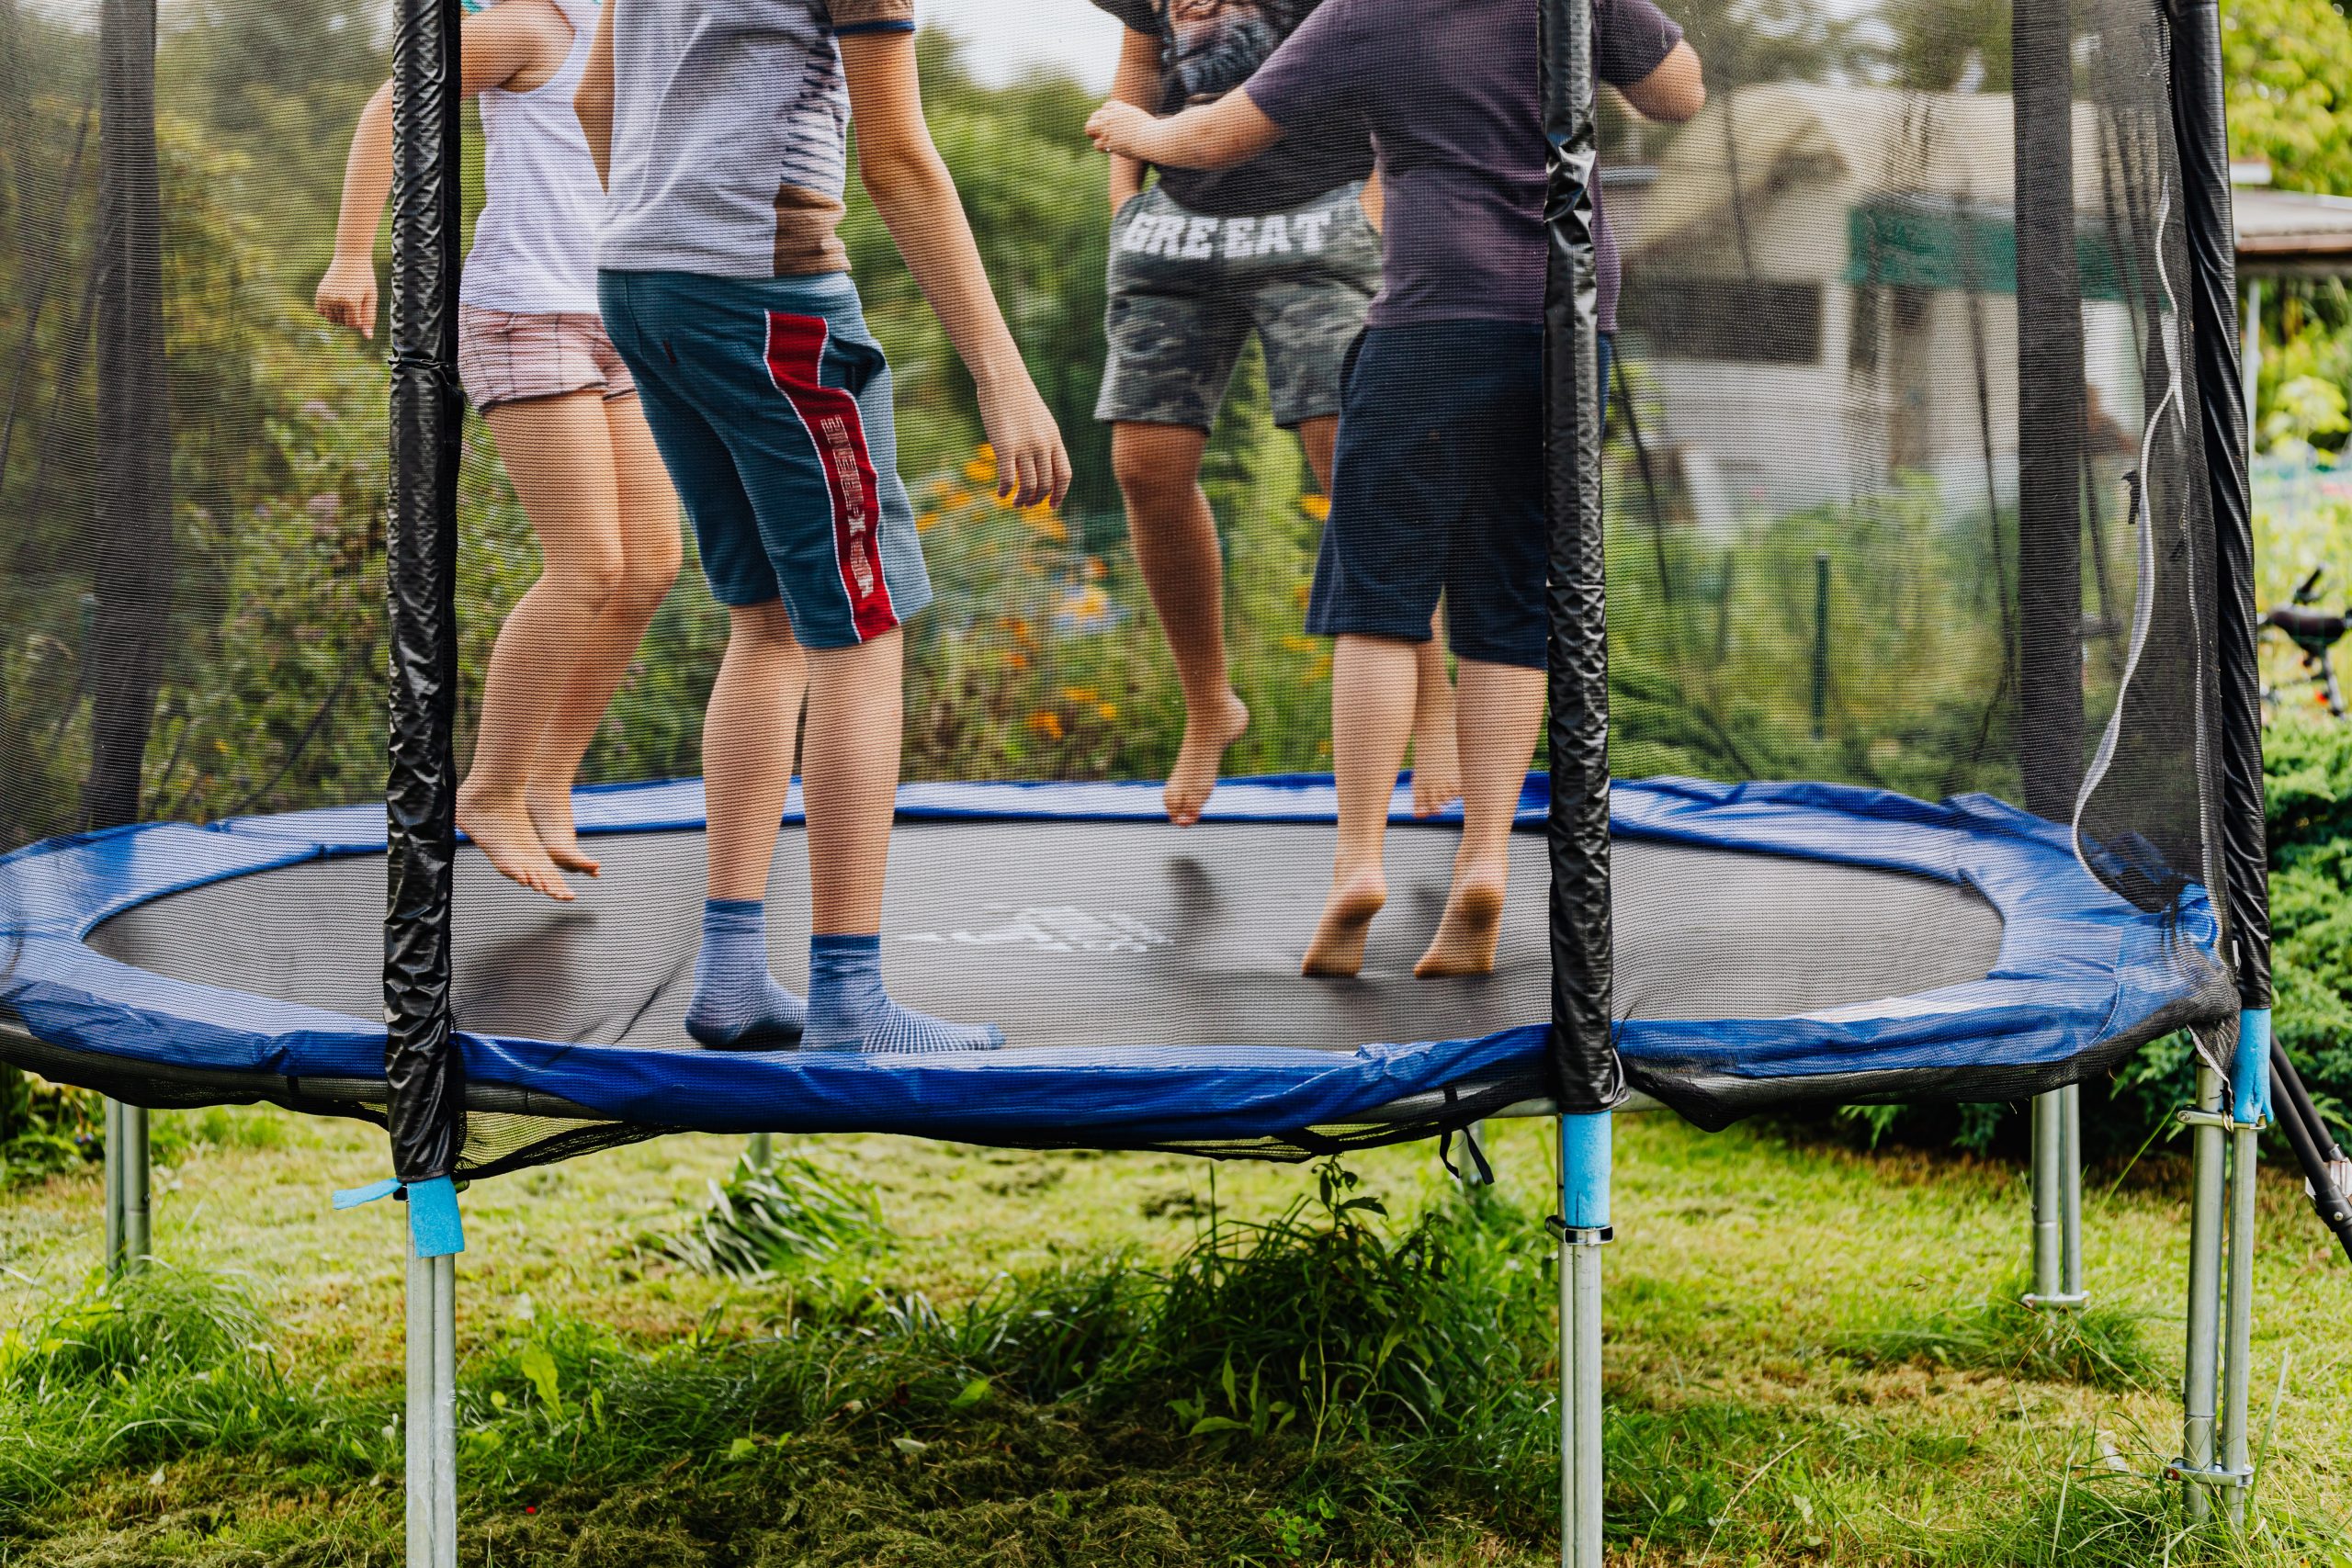 How Backyard Trampoline Improves Growth and Activity - Novak Foundation